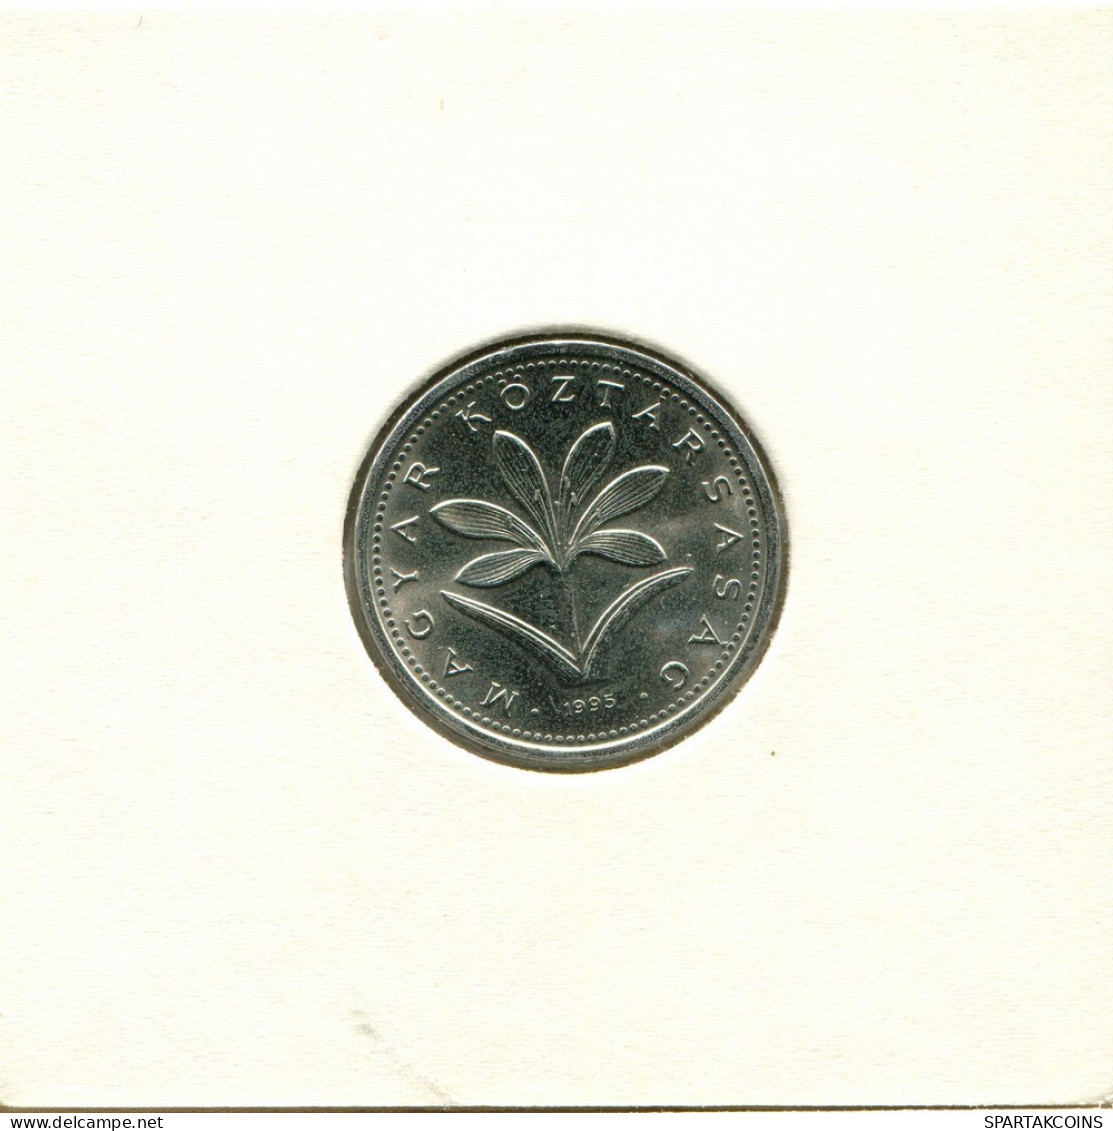 2 FORINT 1995 HUNGARY Coin #AY501.U.A - Hongarije